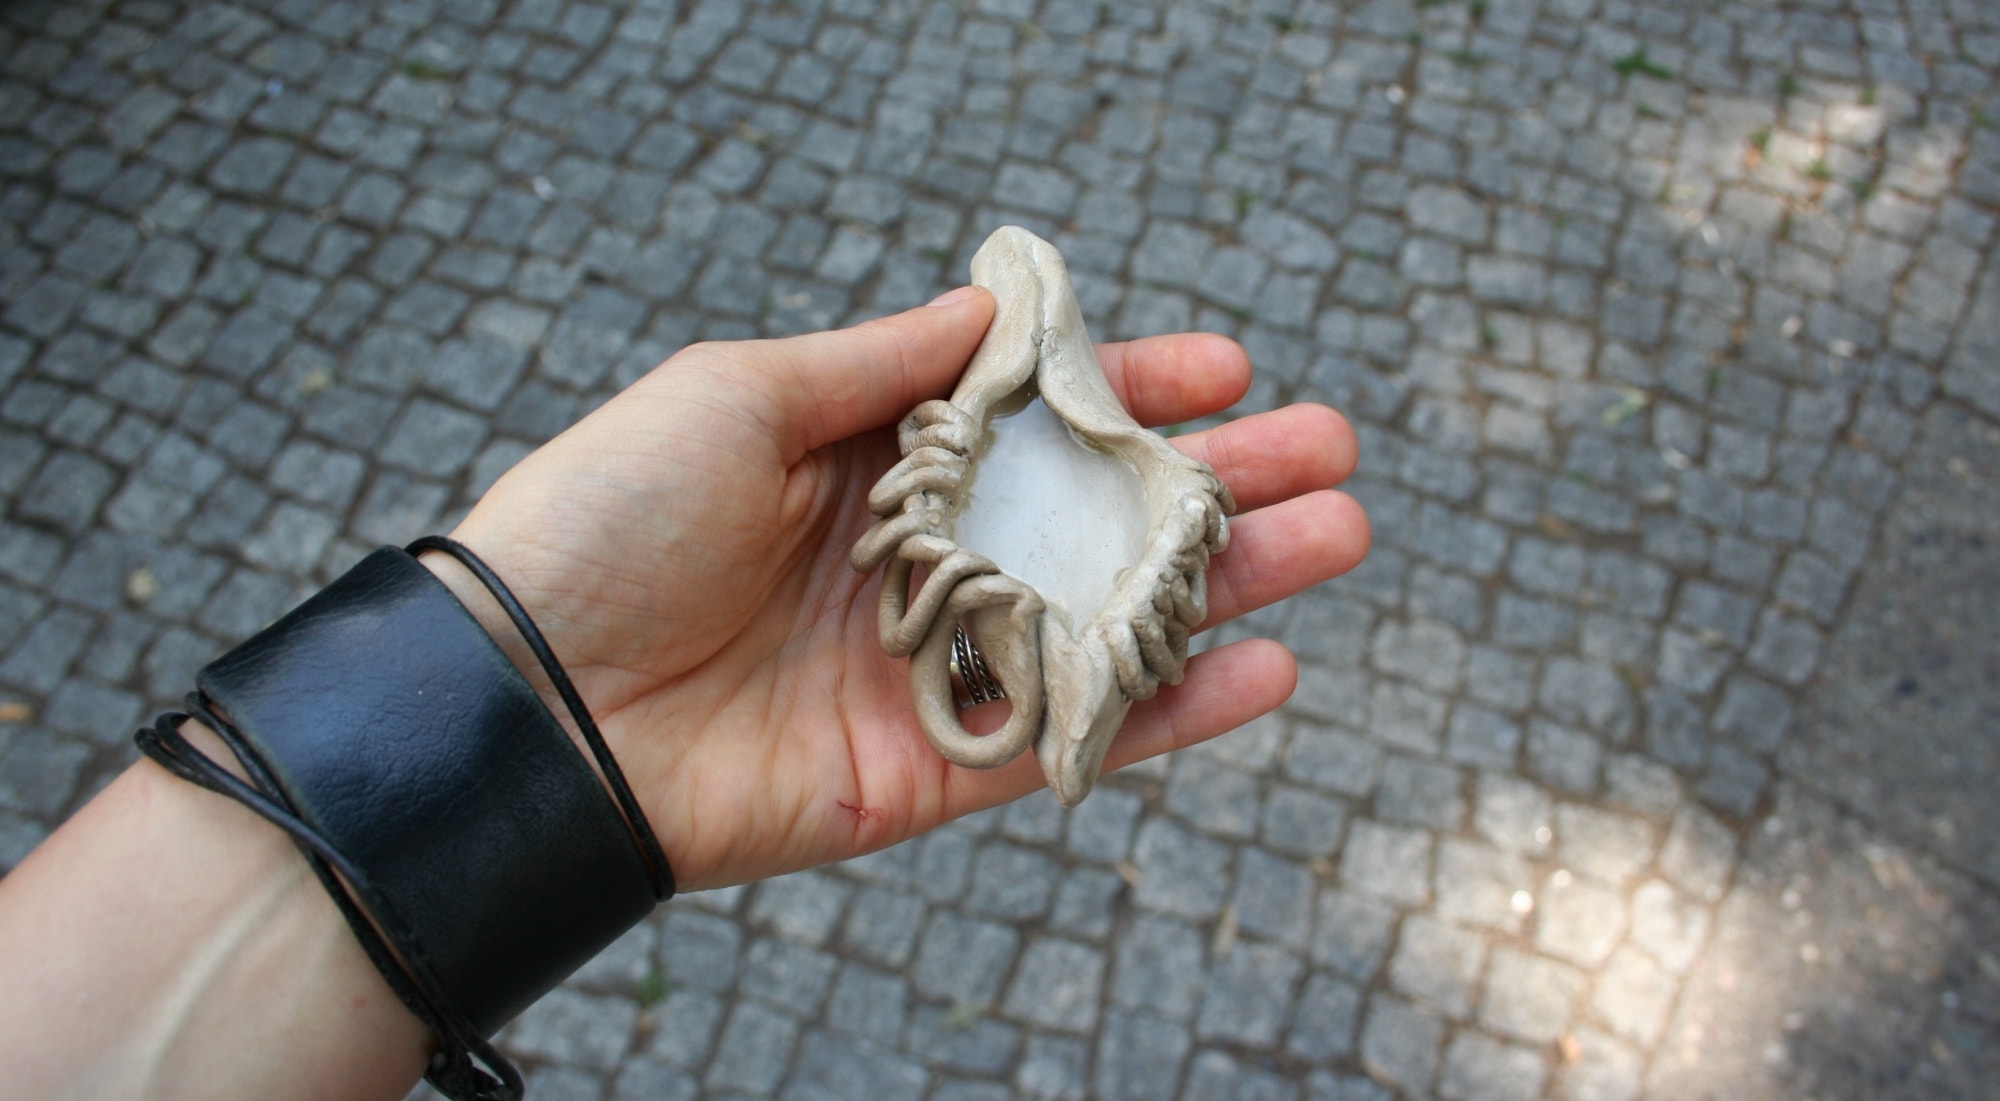 a hand holding a clay sculpture that resembles a vulva